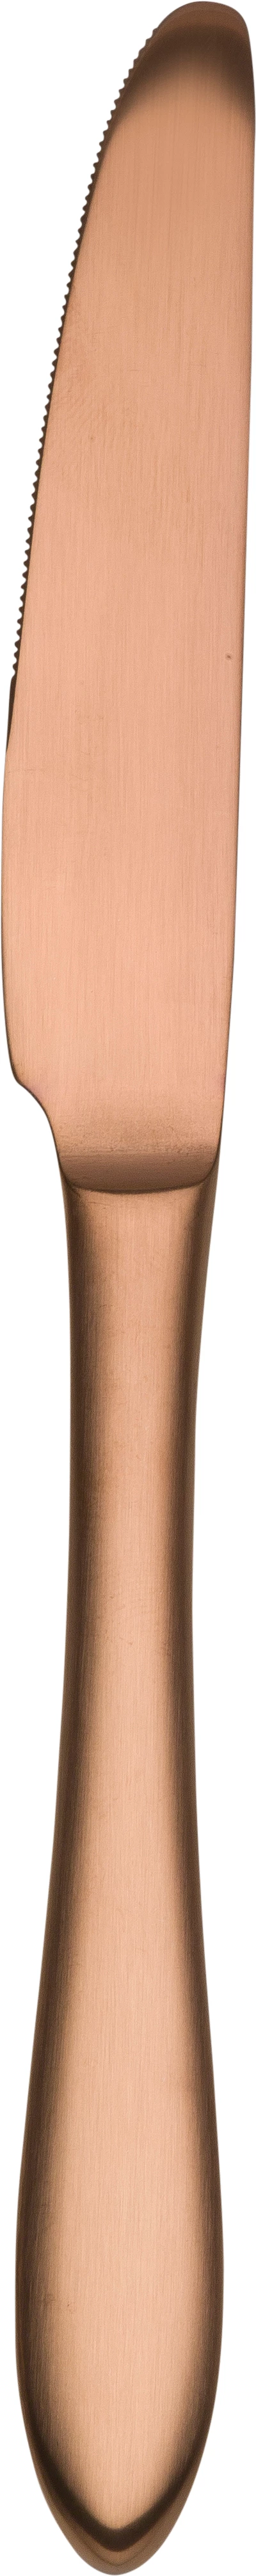 Øland bordkniv, rosaguld, 22,7 cm